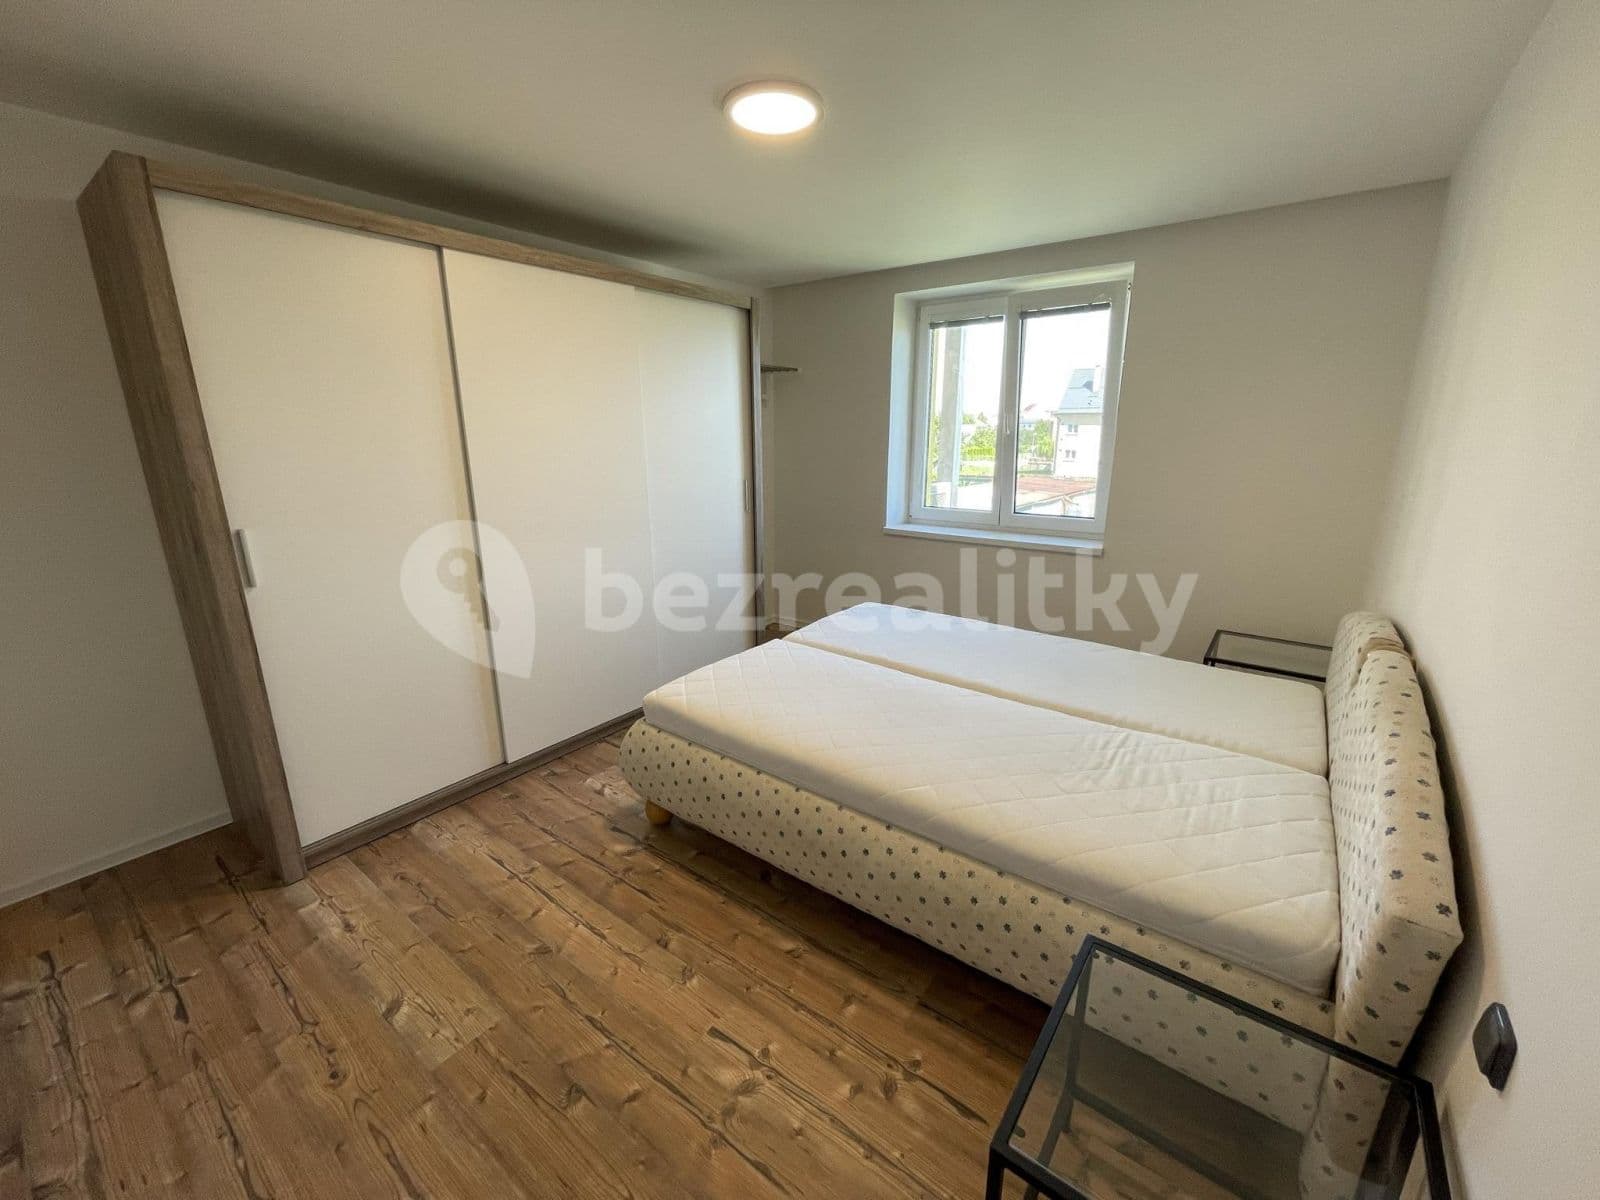 2 bedroom flat to rent, 62 m², Mohelnice, Olomoucký Region